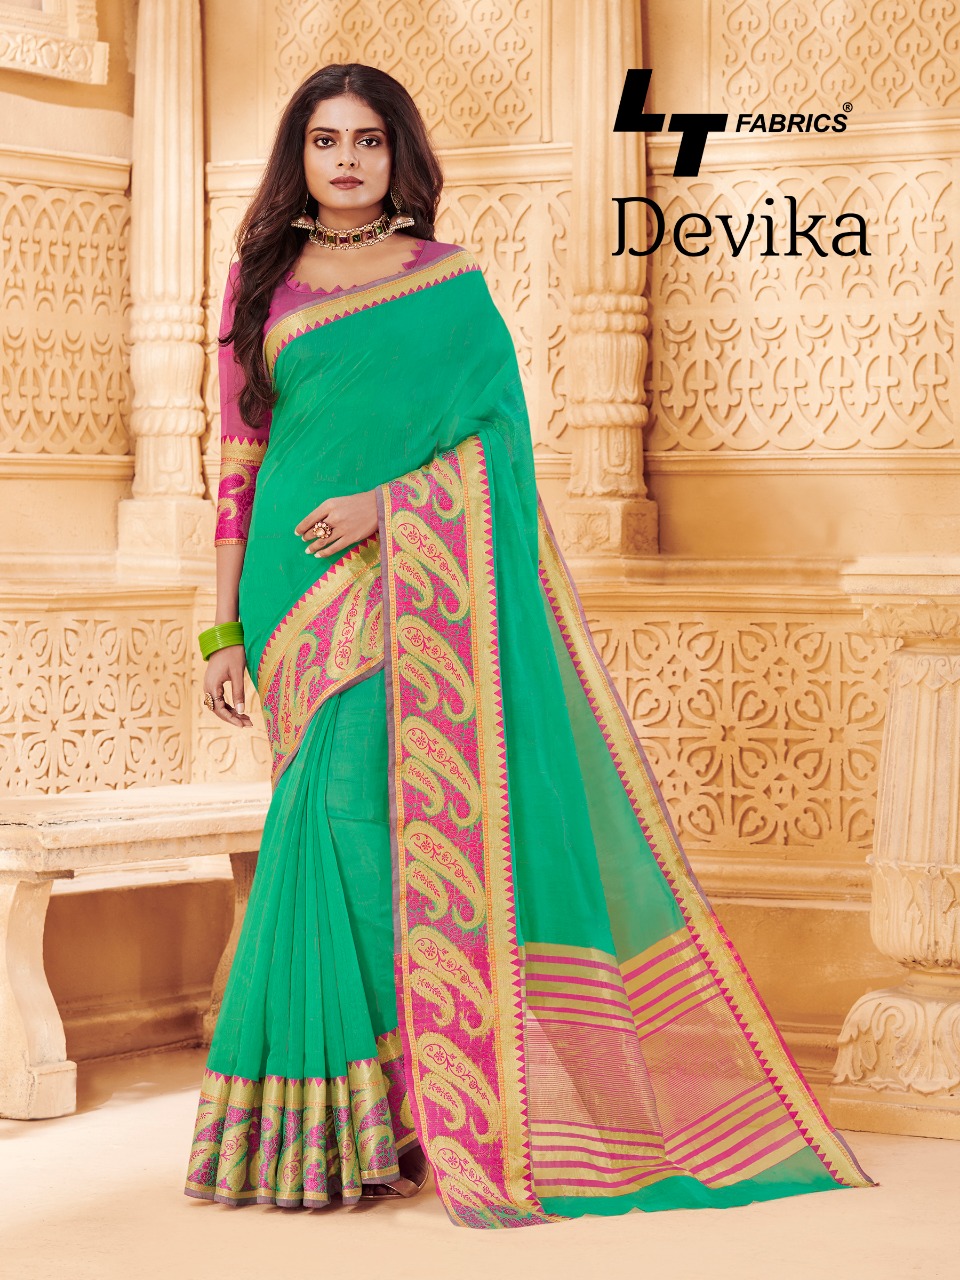 Lt Fashion Present Devika Cotton Silk Casual Wear Saree Online Shopping In Surat